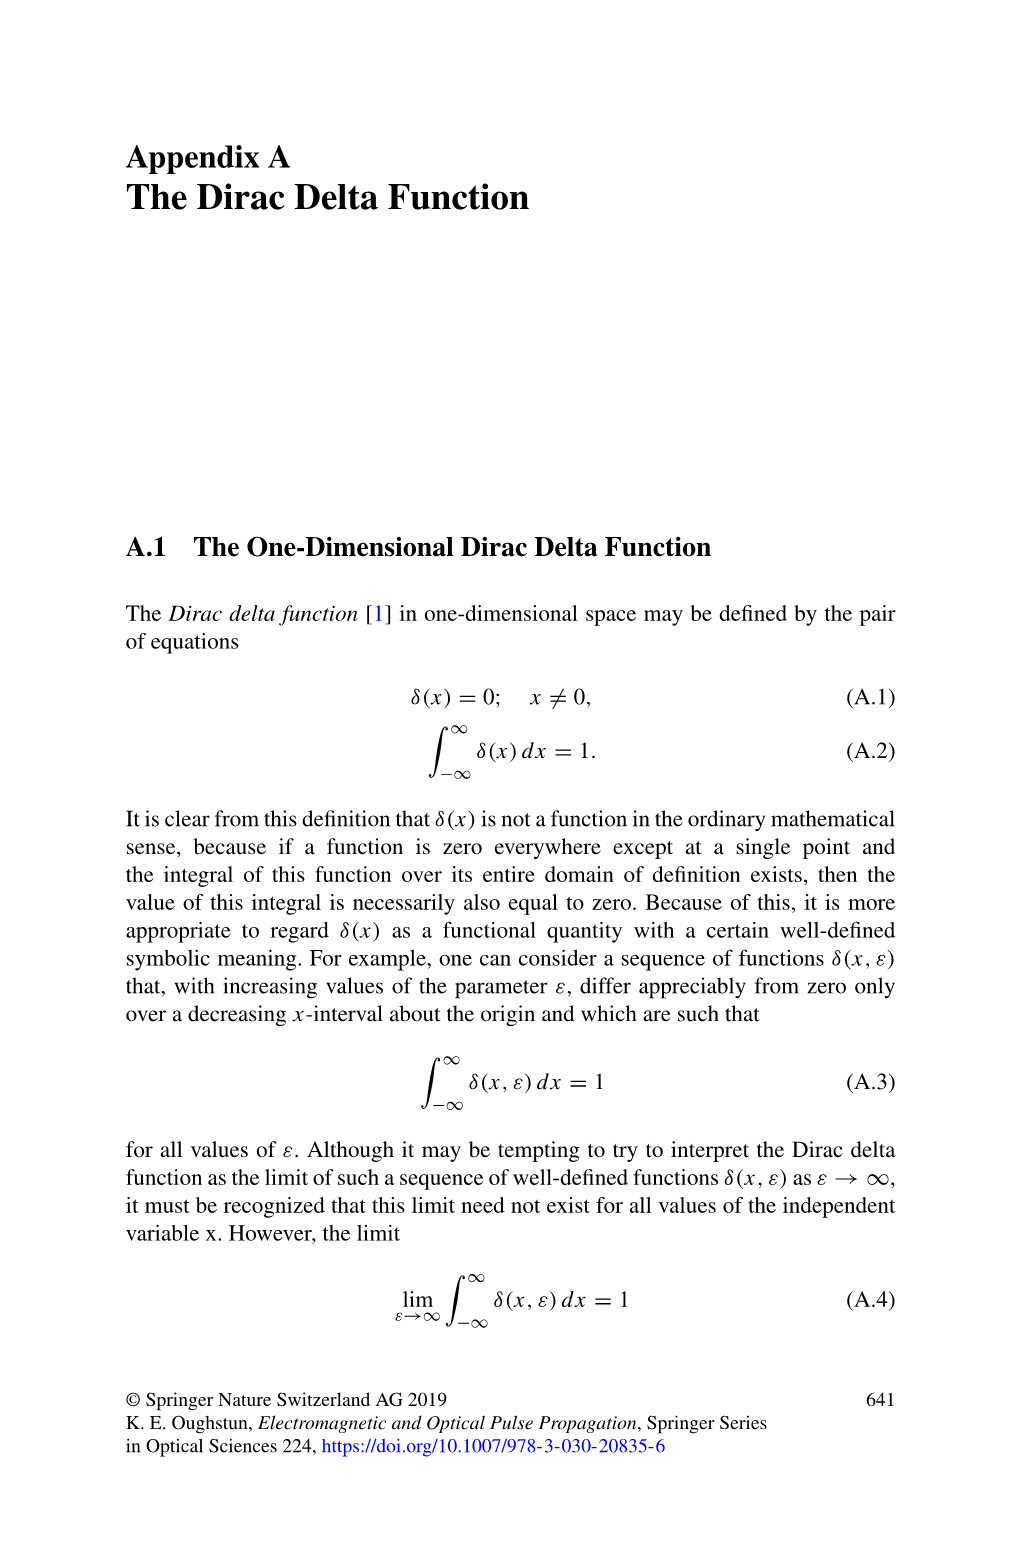 The Dirac Delta Function